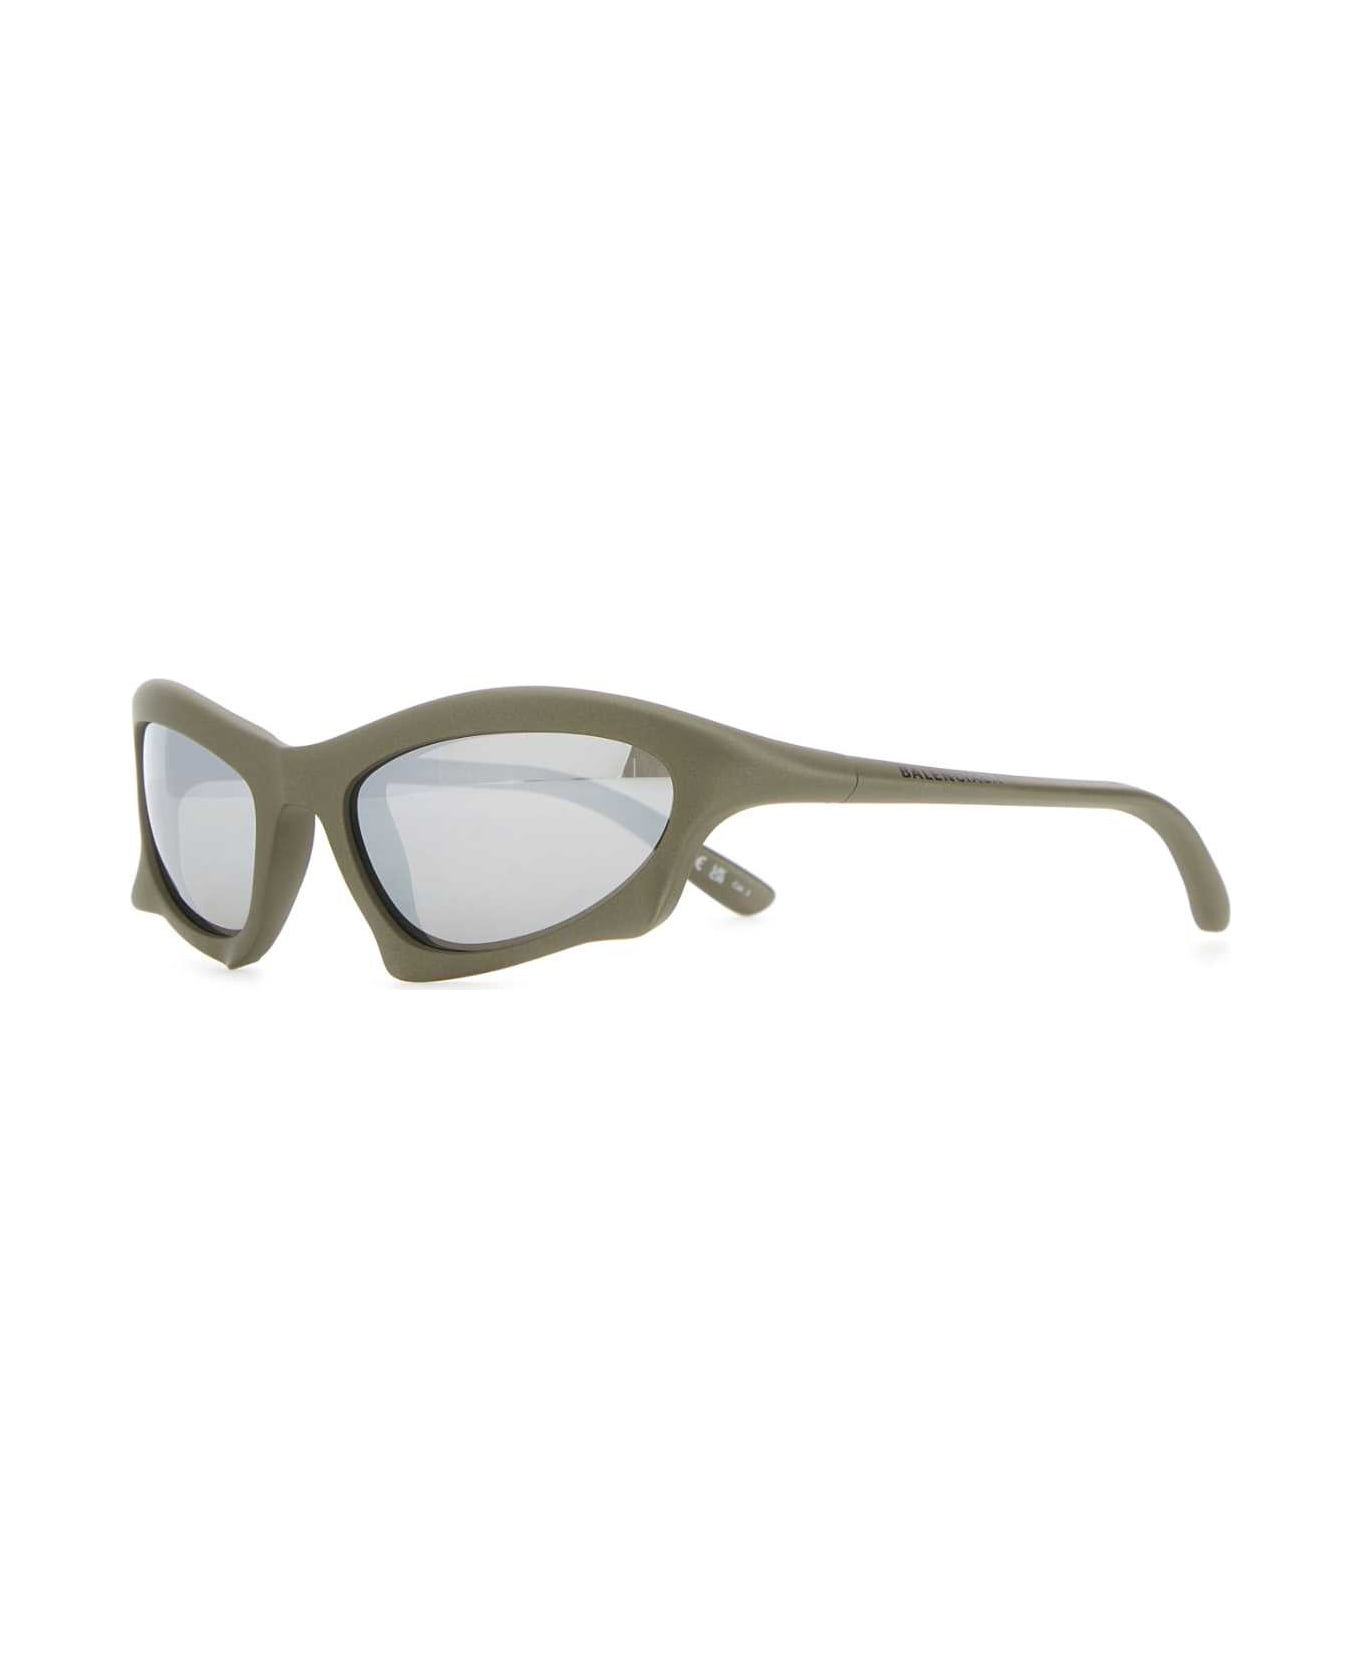 Balenciaga Silver Acetate Bat Rectangle Sunglasses - SILVER サングラス